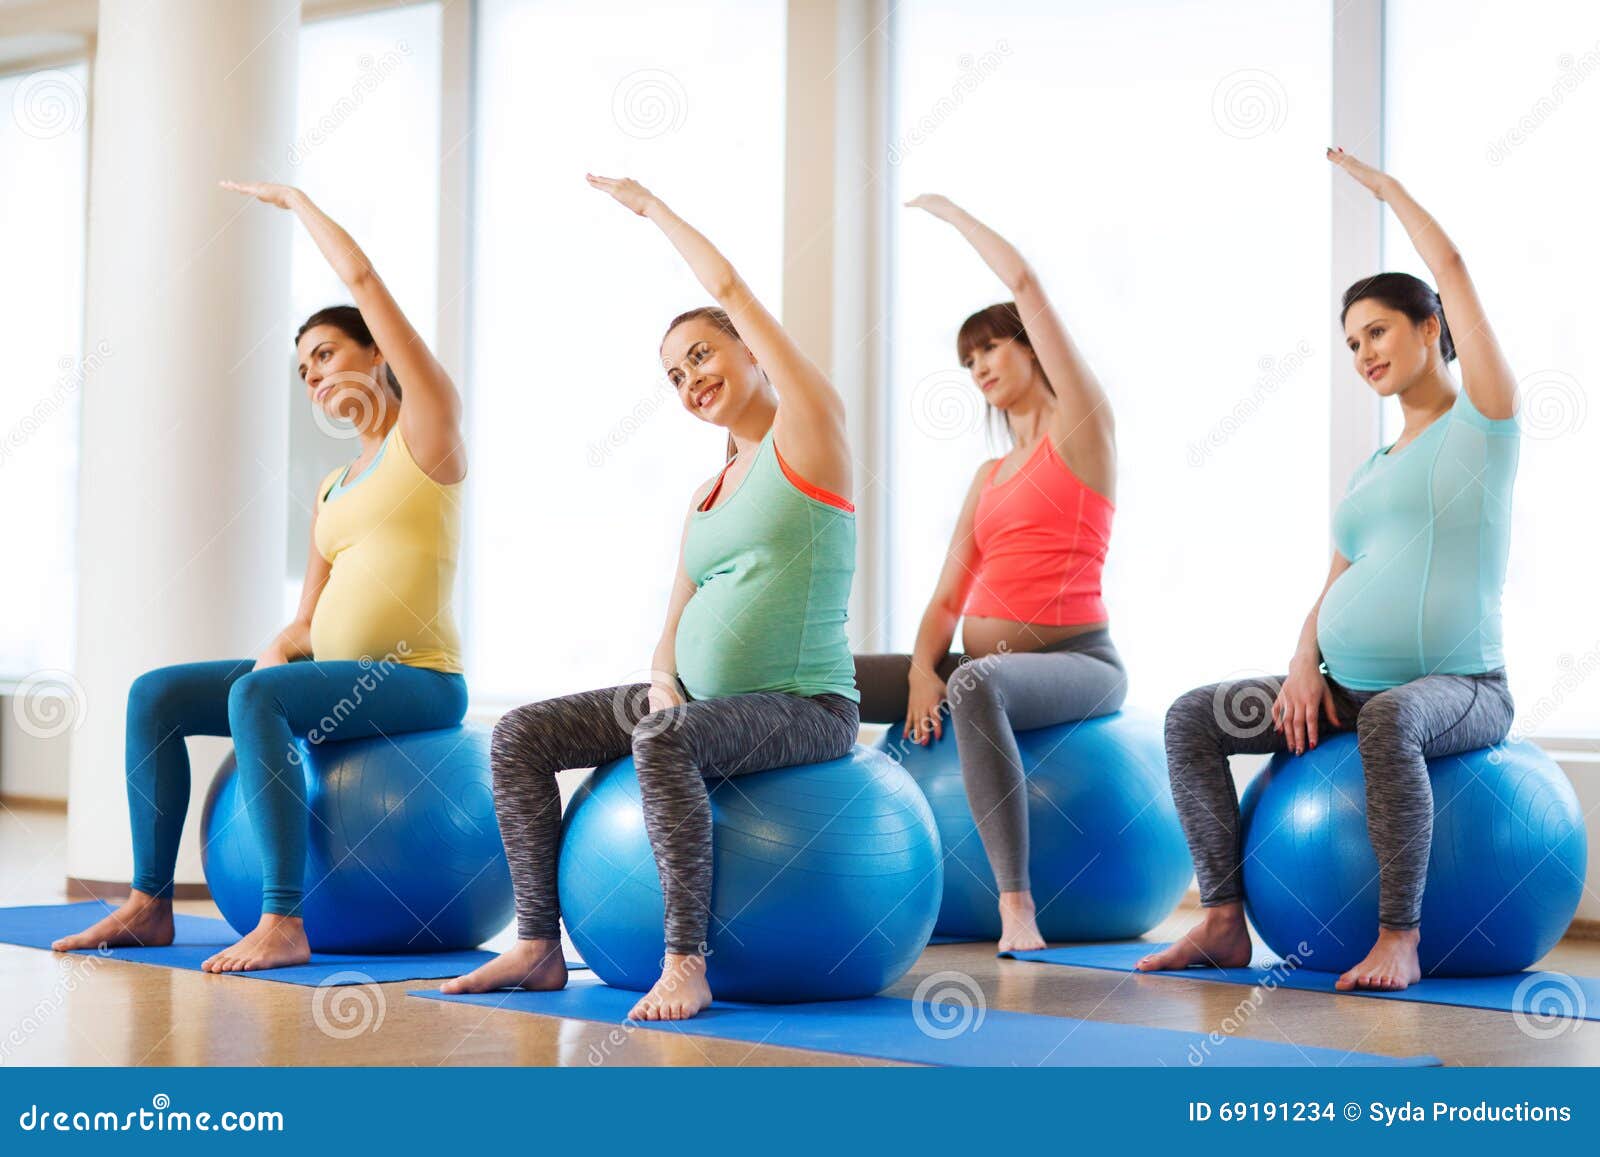 https://thumbs.dreamstime.com/z/mujeres-embarazadas-felices-que-ejercitan-en-fitball-en-gimnasio-69191234.jpg